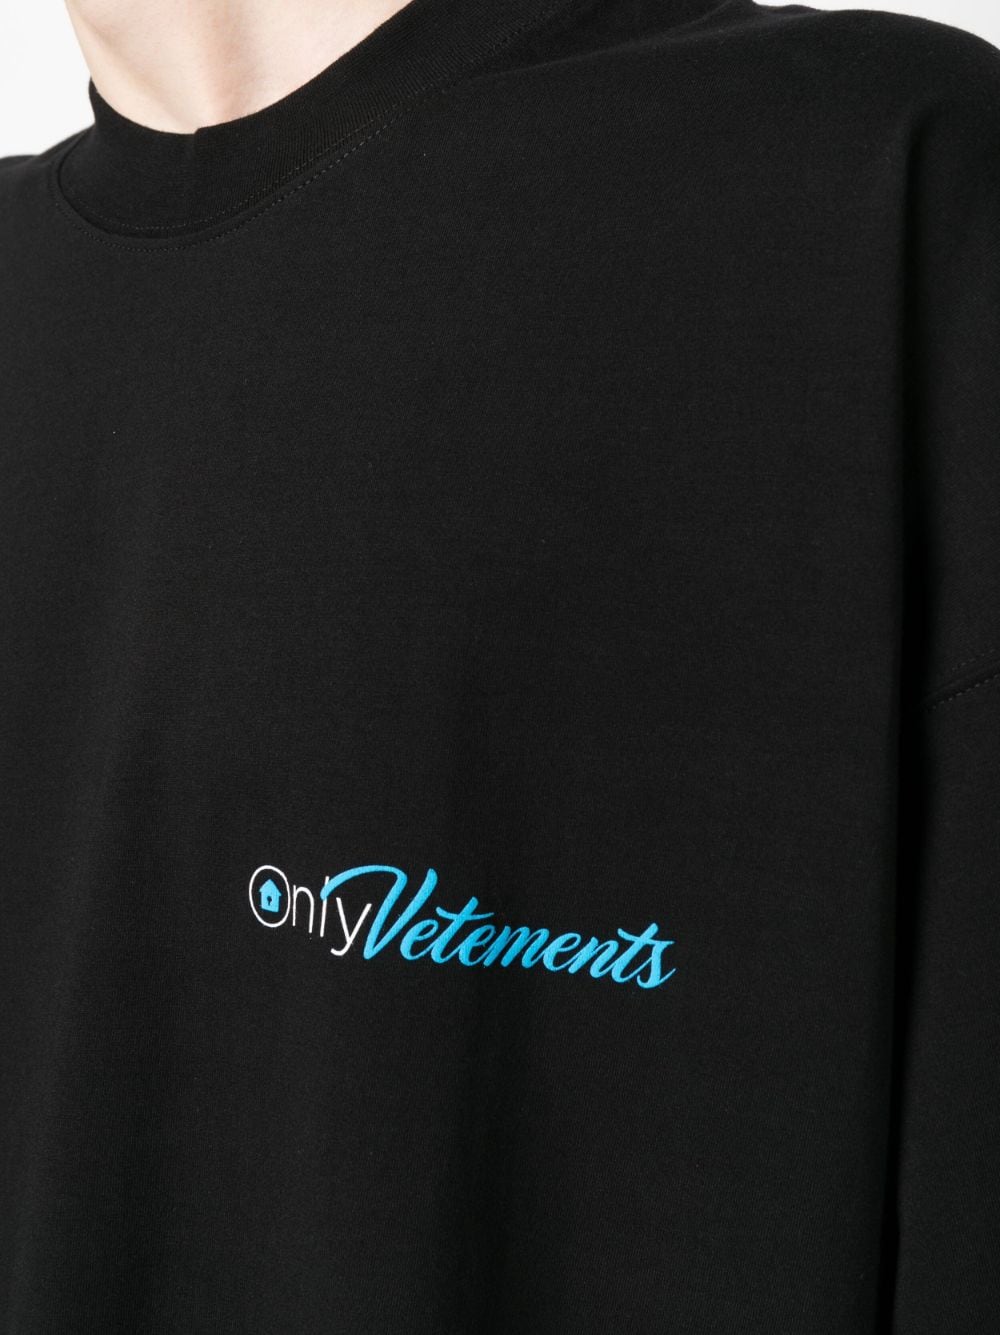 Oversized black t-shirt with logo print